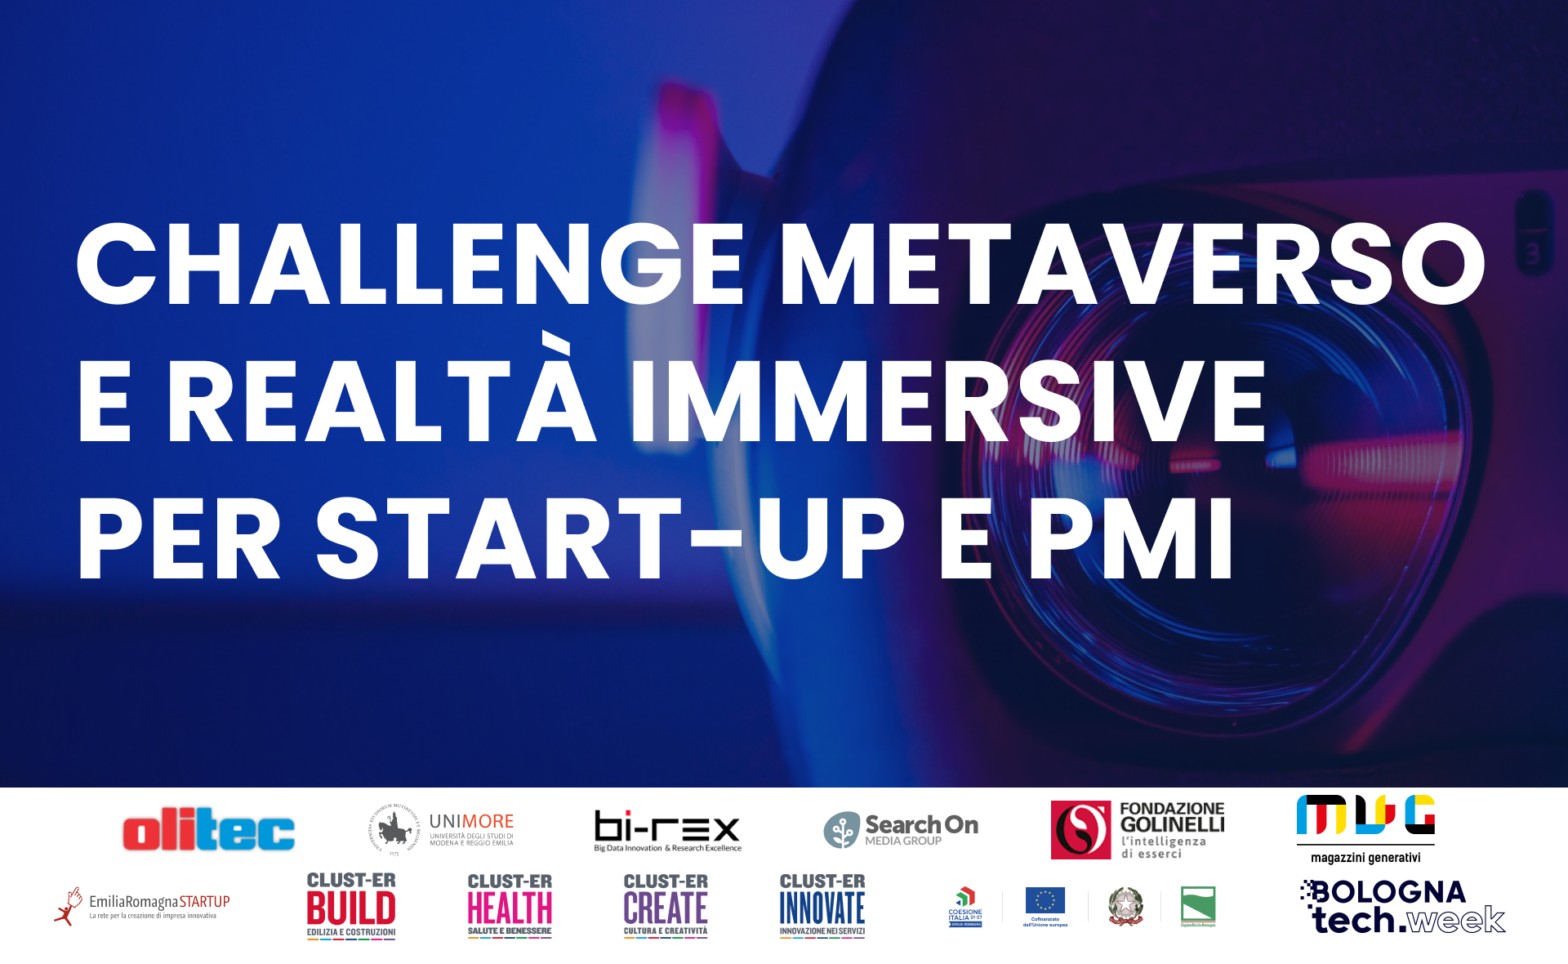 Challenge metaverso e realtà immersive per start-up e pmi